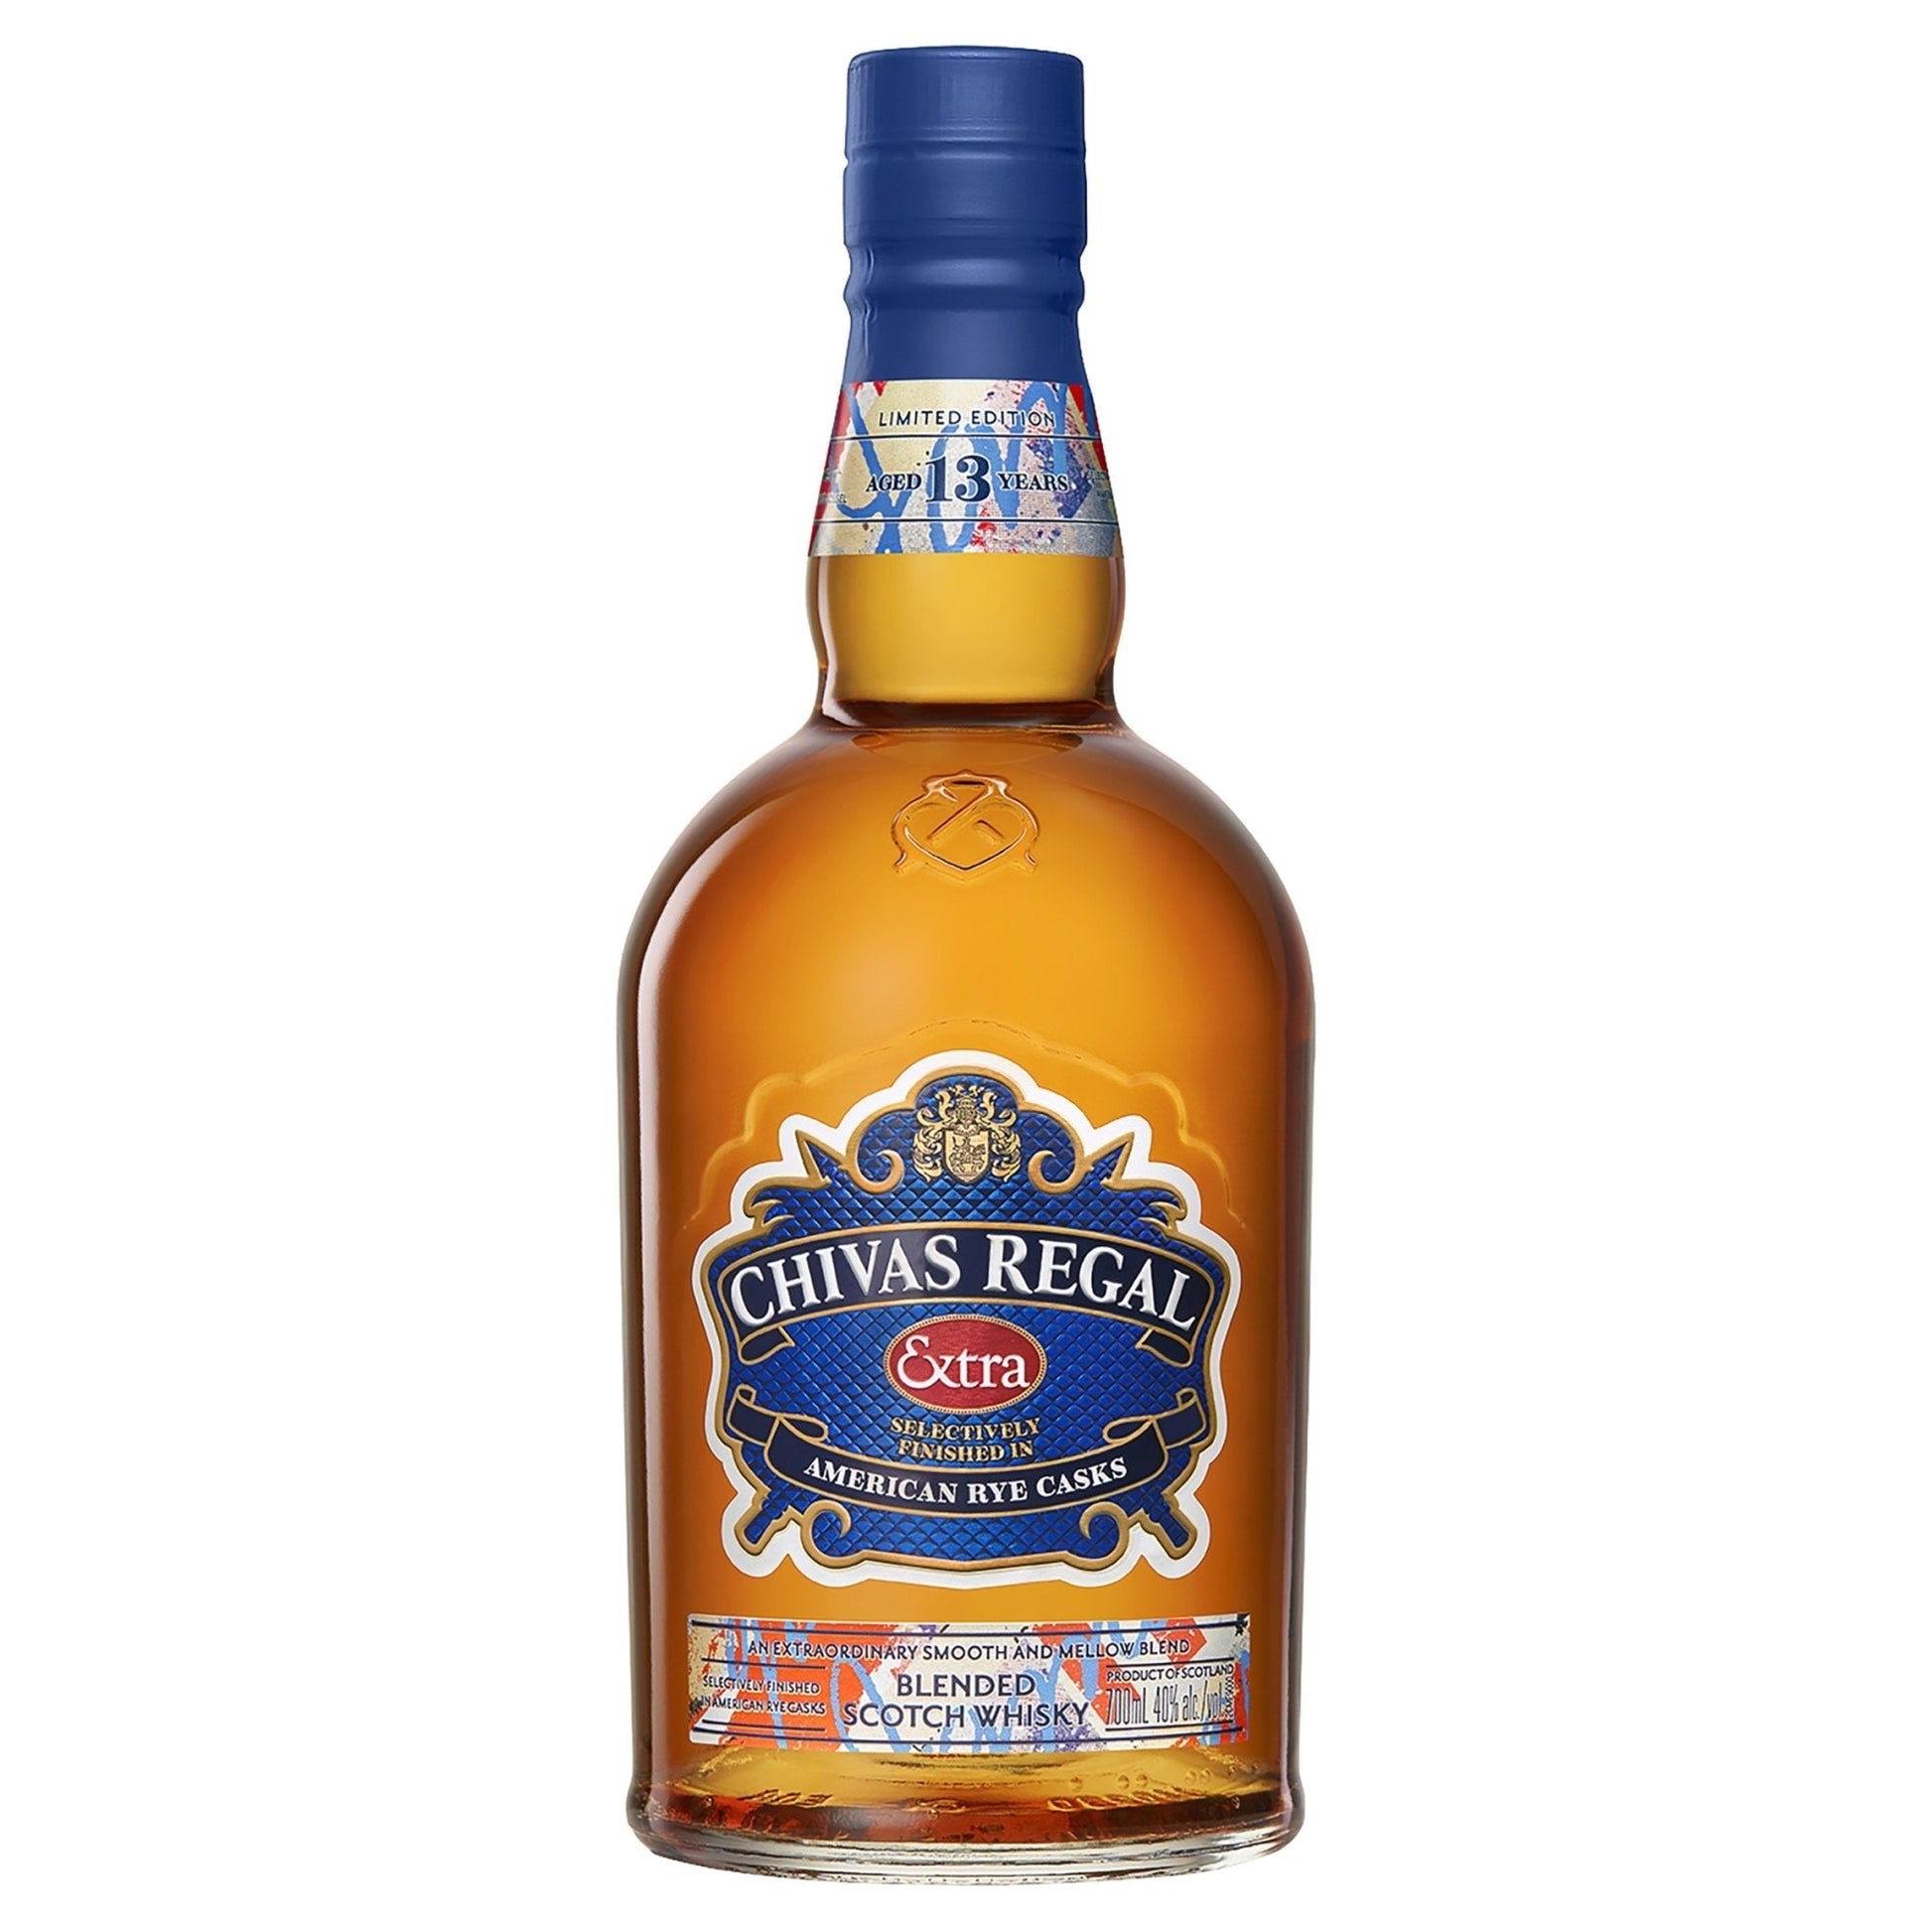 Chivas Regal Extra 13 Year Old American Rye Cask Scotch Whisky (700mL) - drinkswithdave